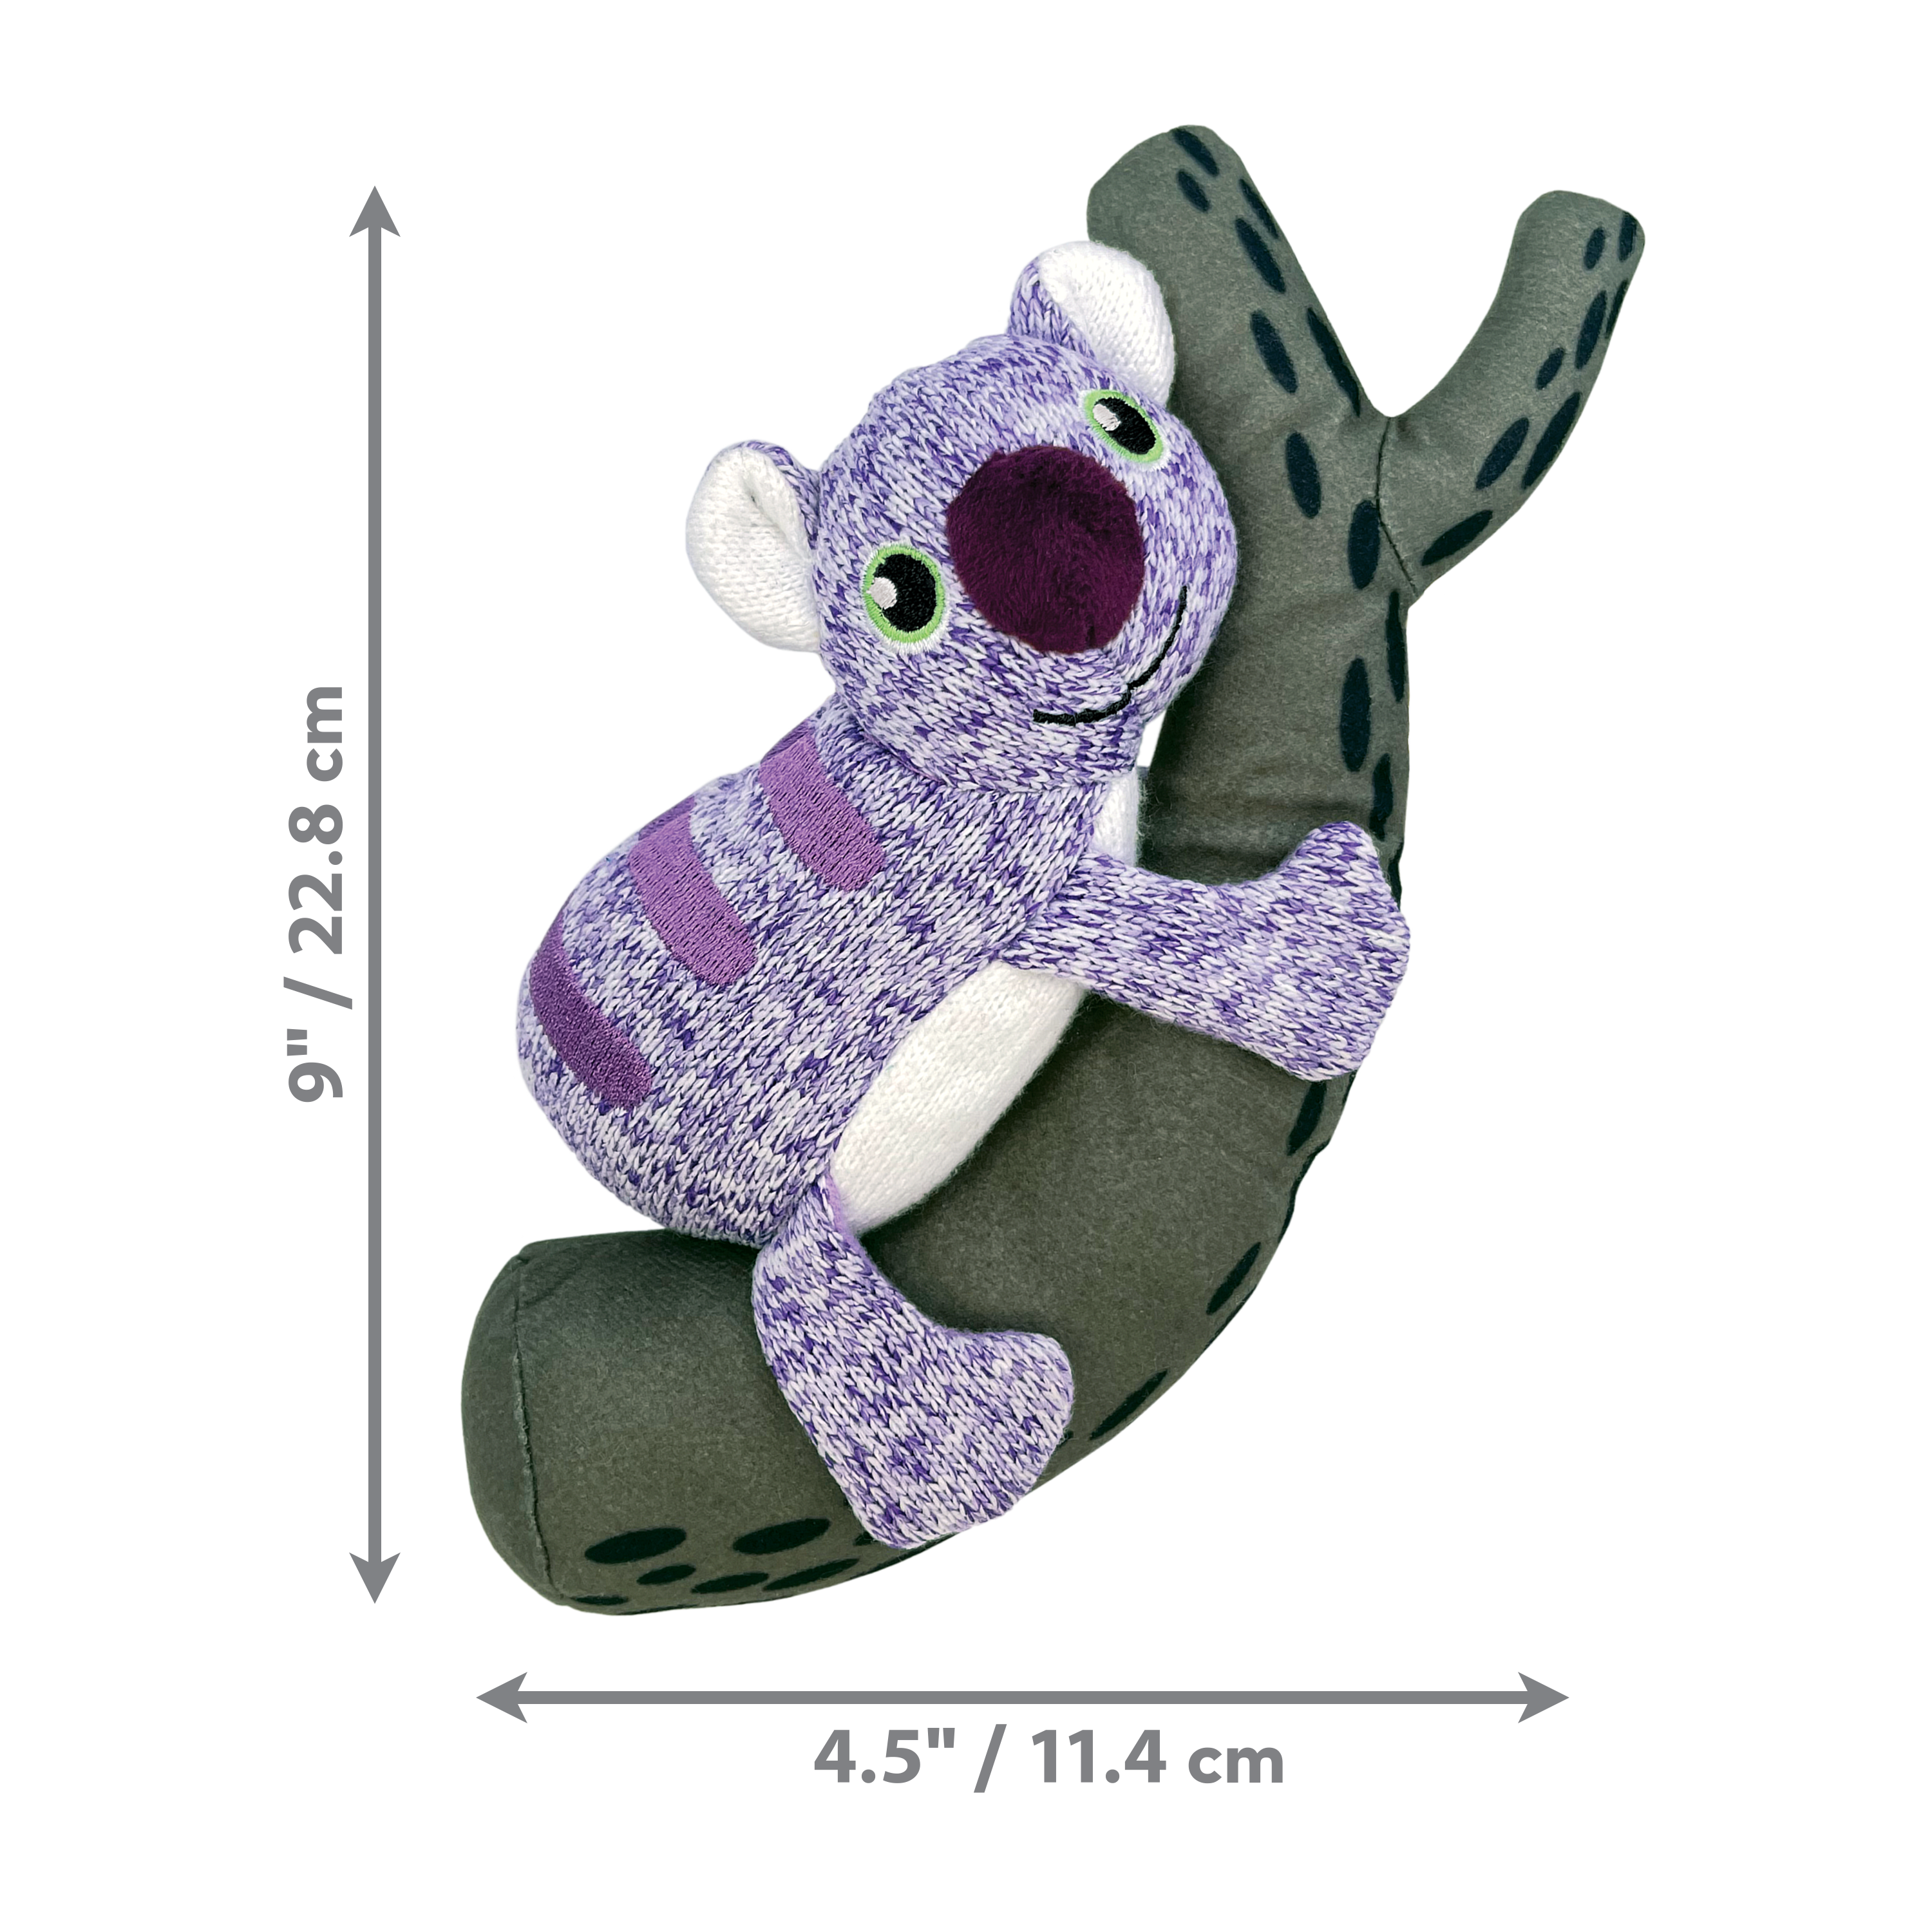 Pull-A-Partz Pals Koala dimoffpack imagen de producto